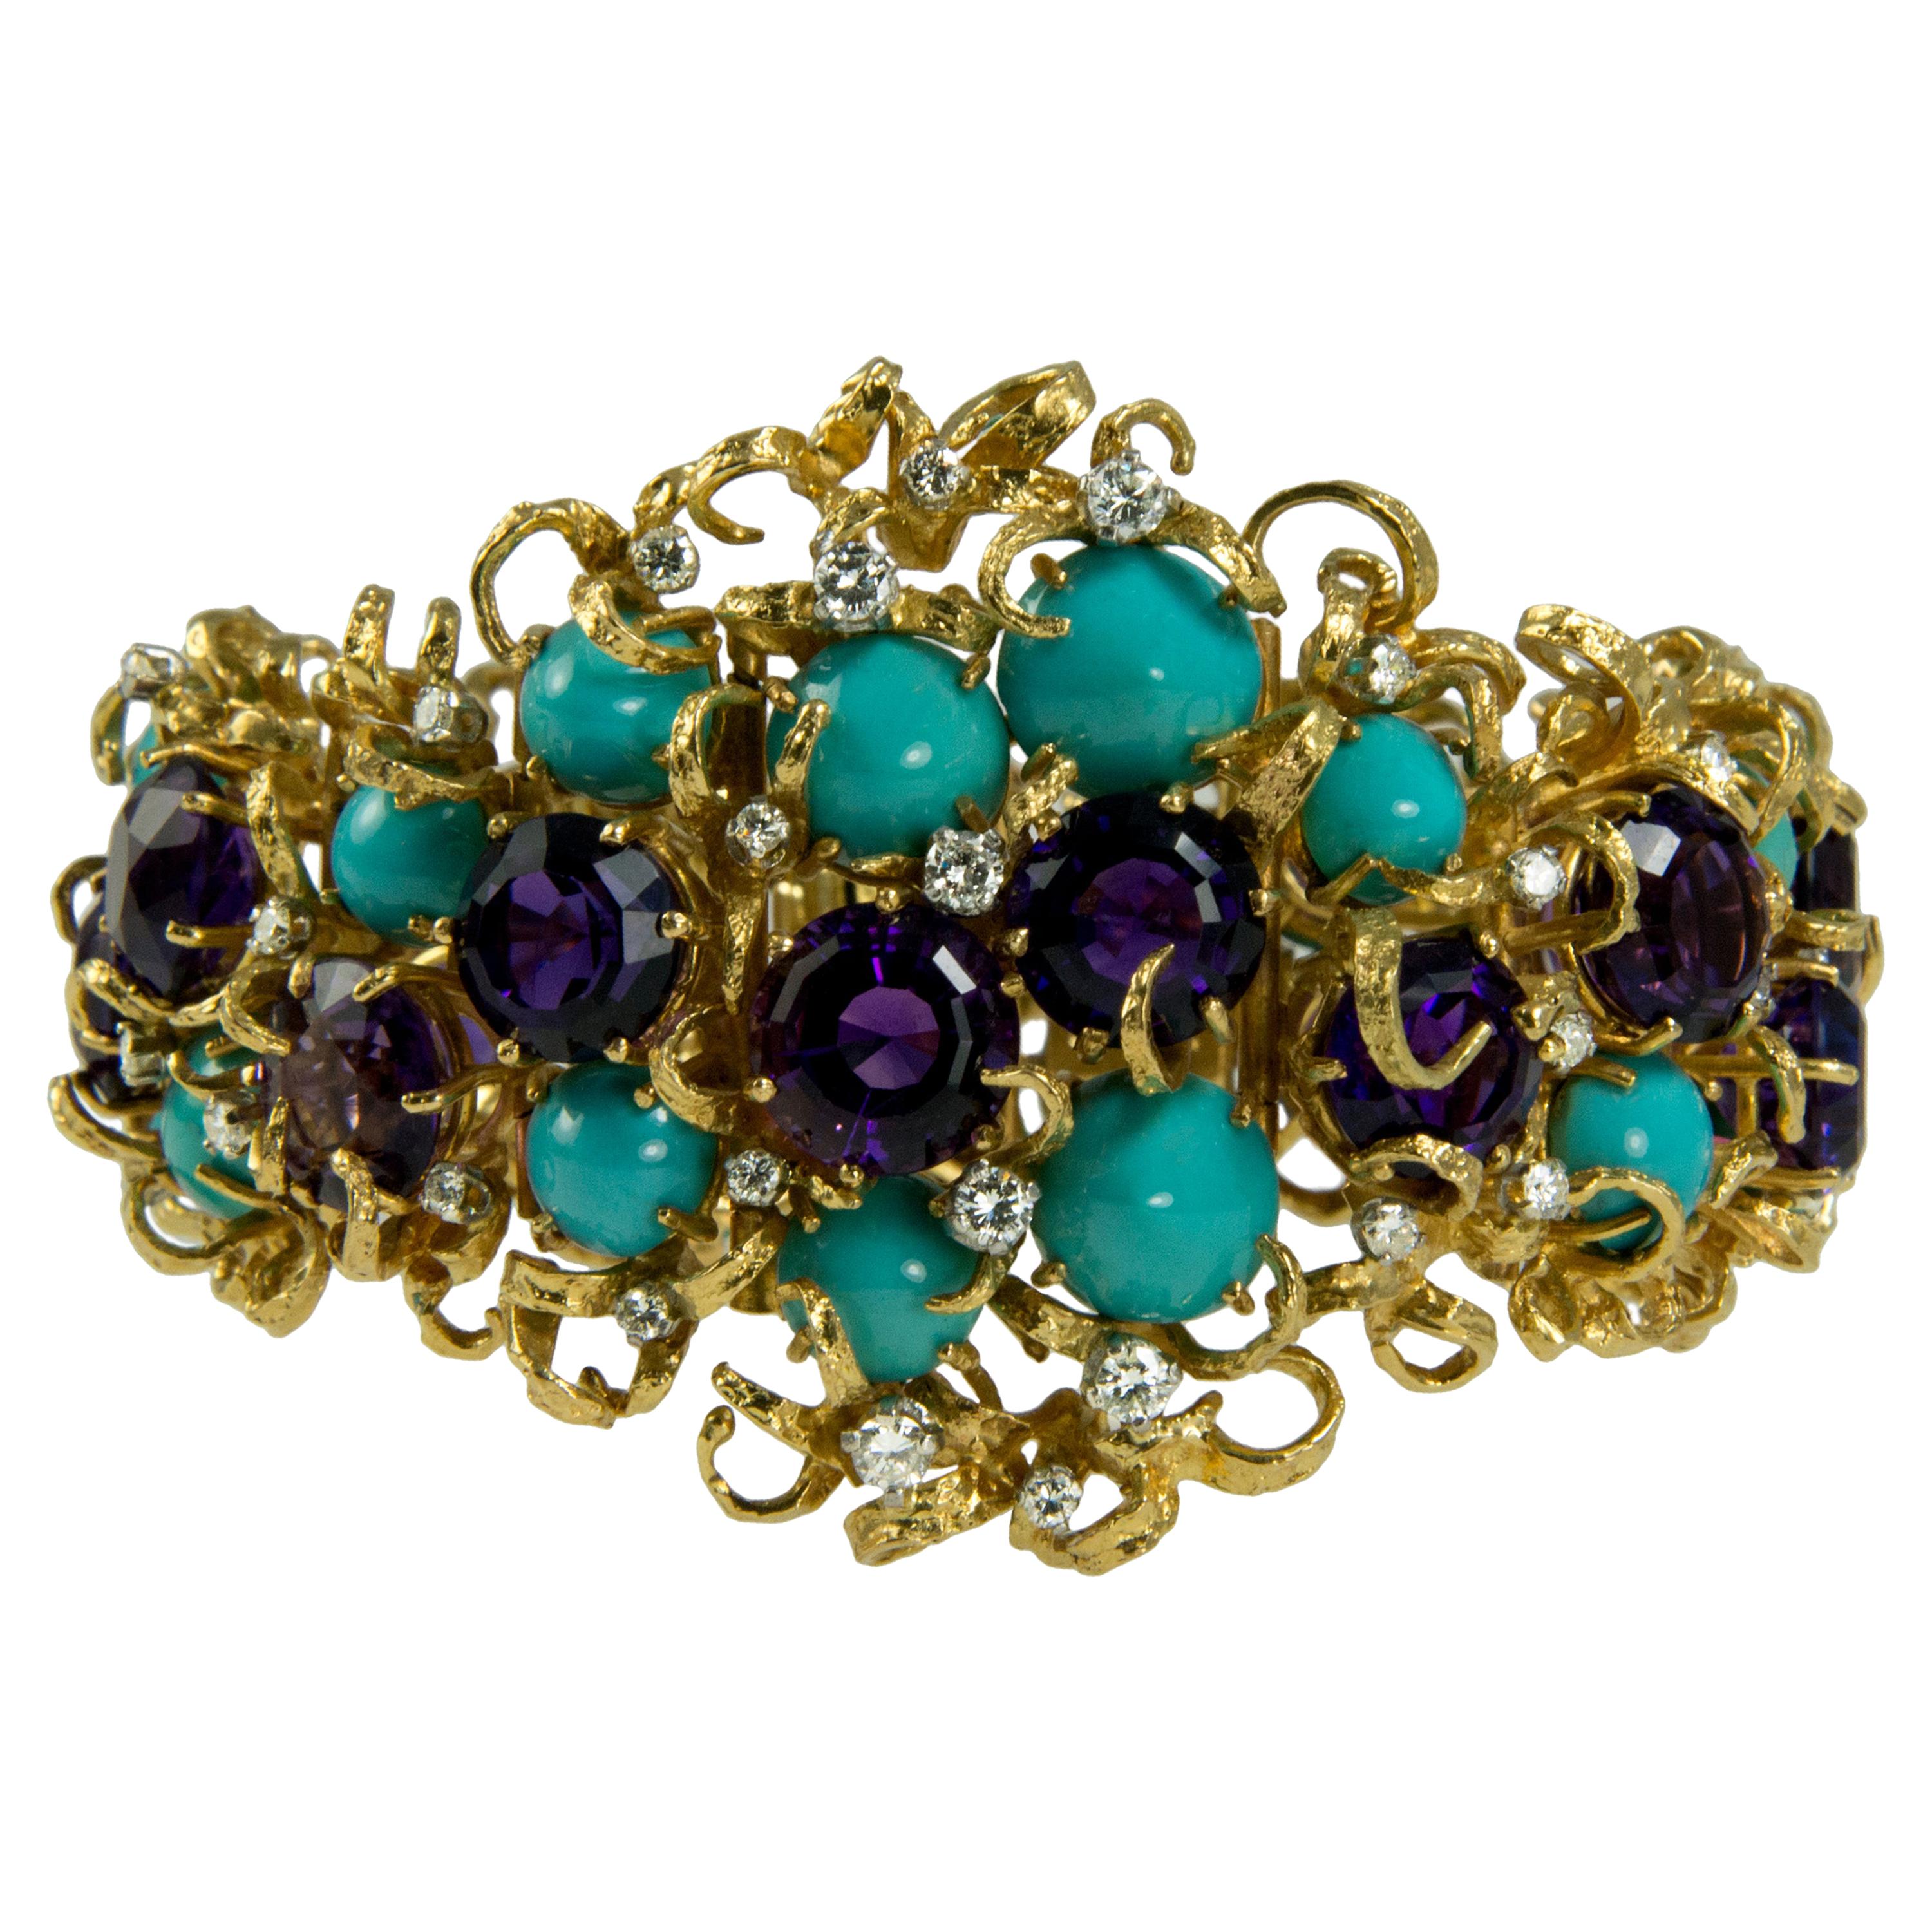 c. 1960 George Weil Amethyst, Turquoise, Diamond, Gold and Platinum Bracelet